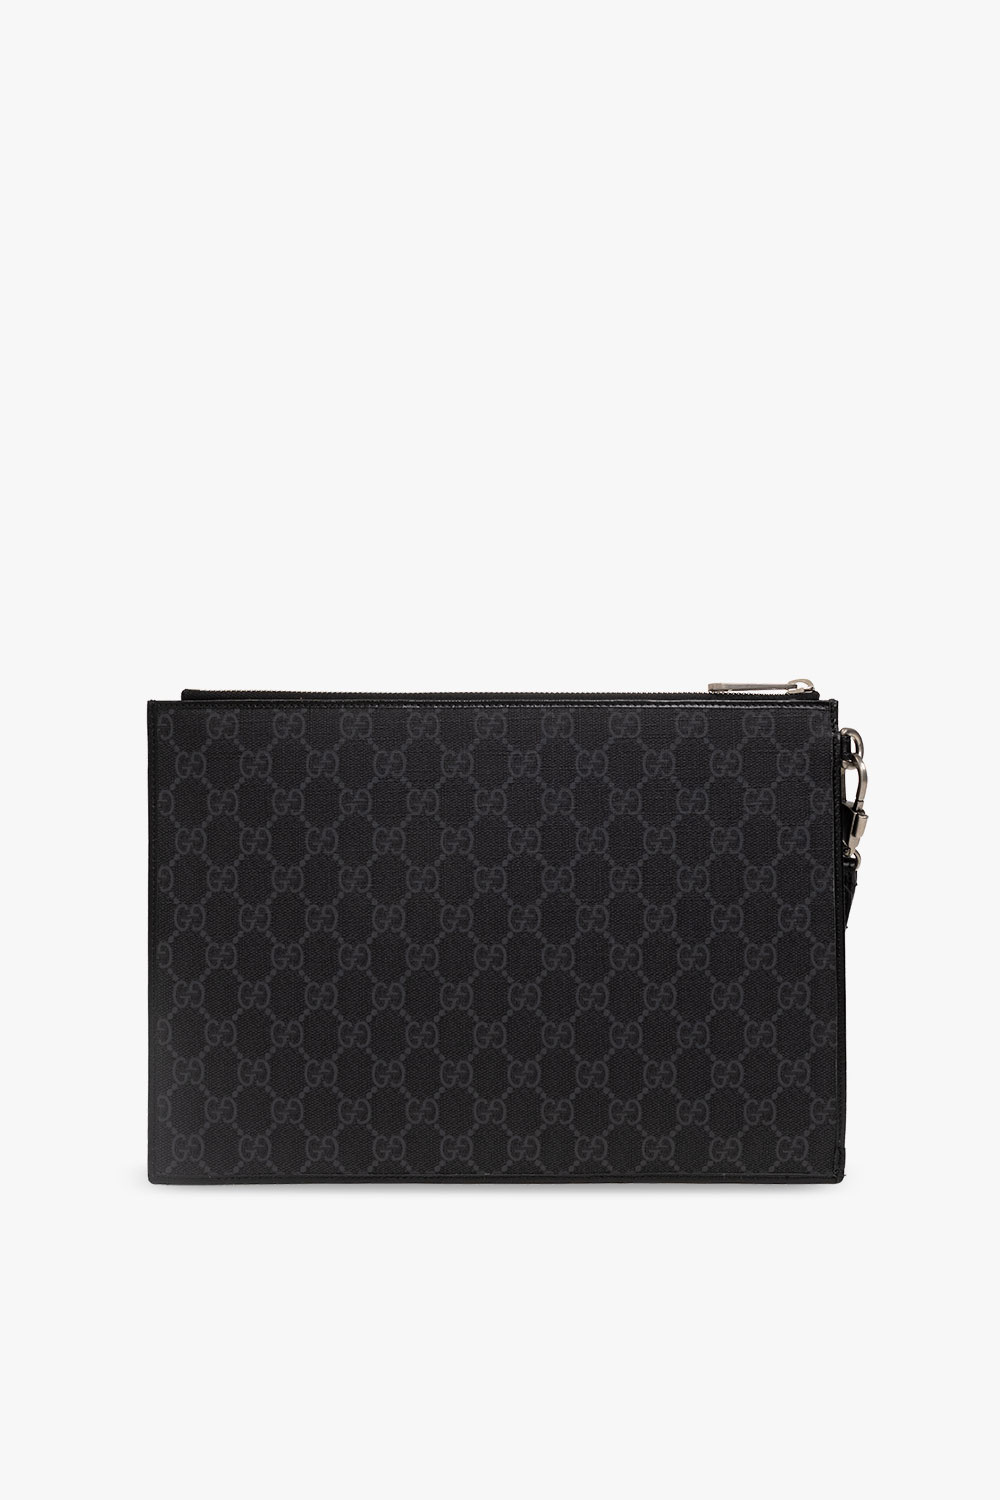 Gucci Handbag with logo